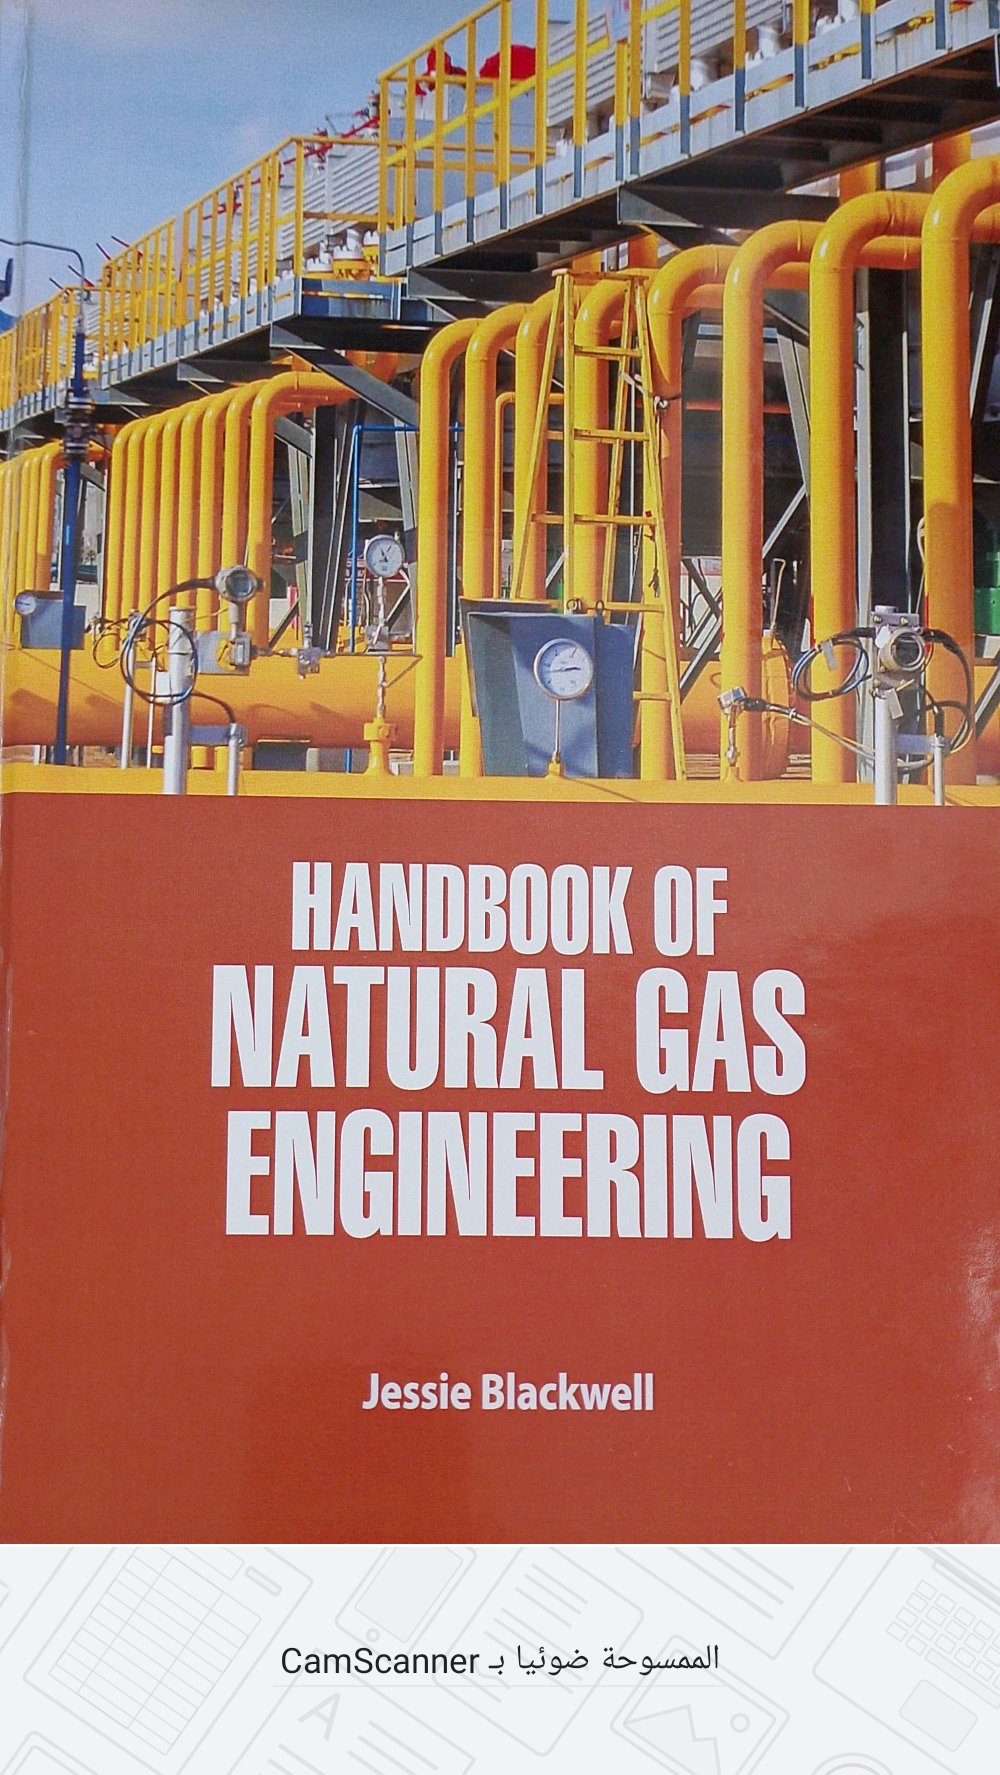 Handbook of natural gas engineering